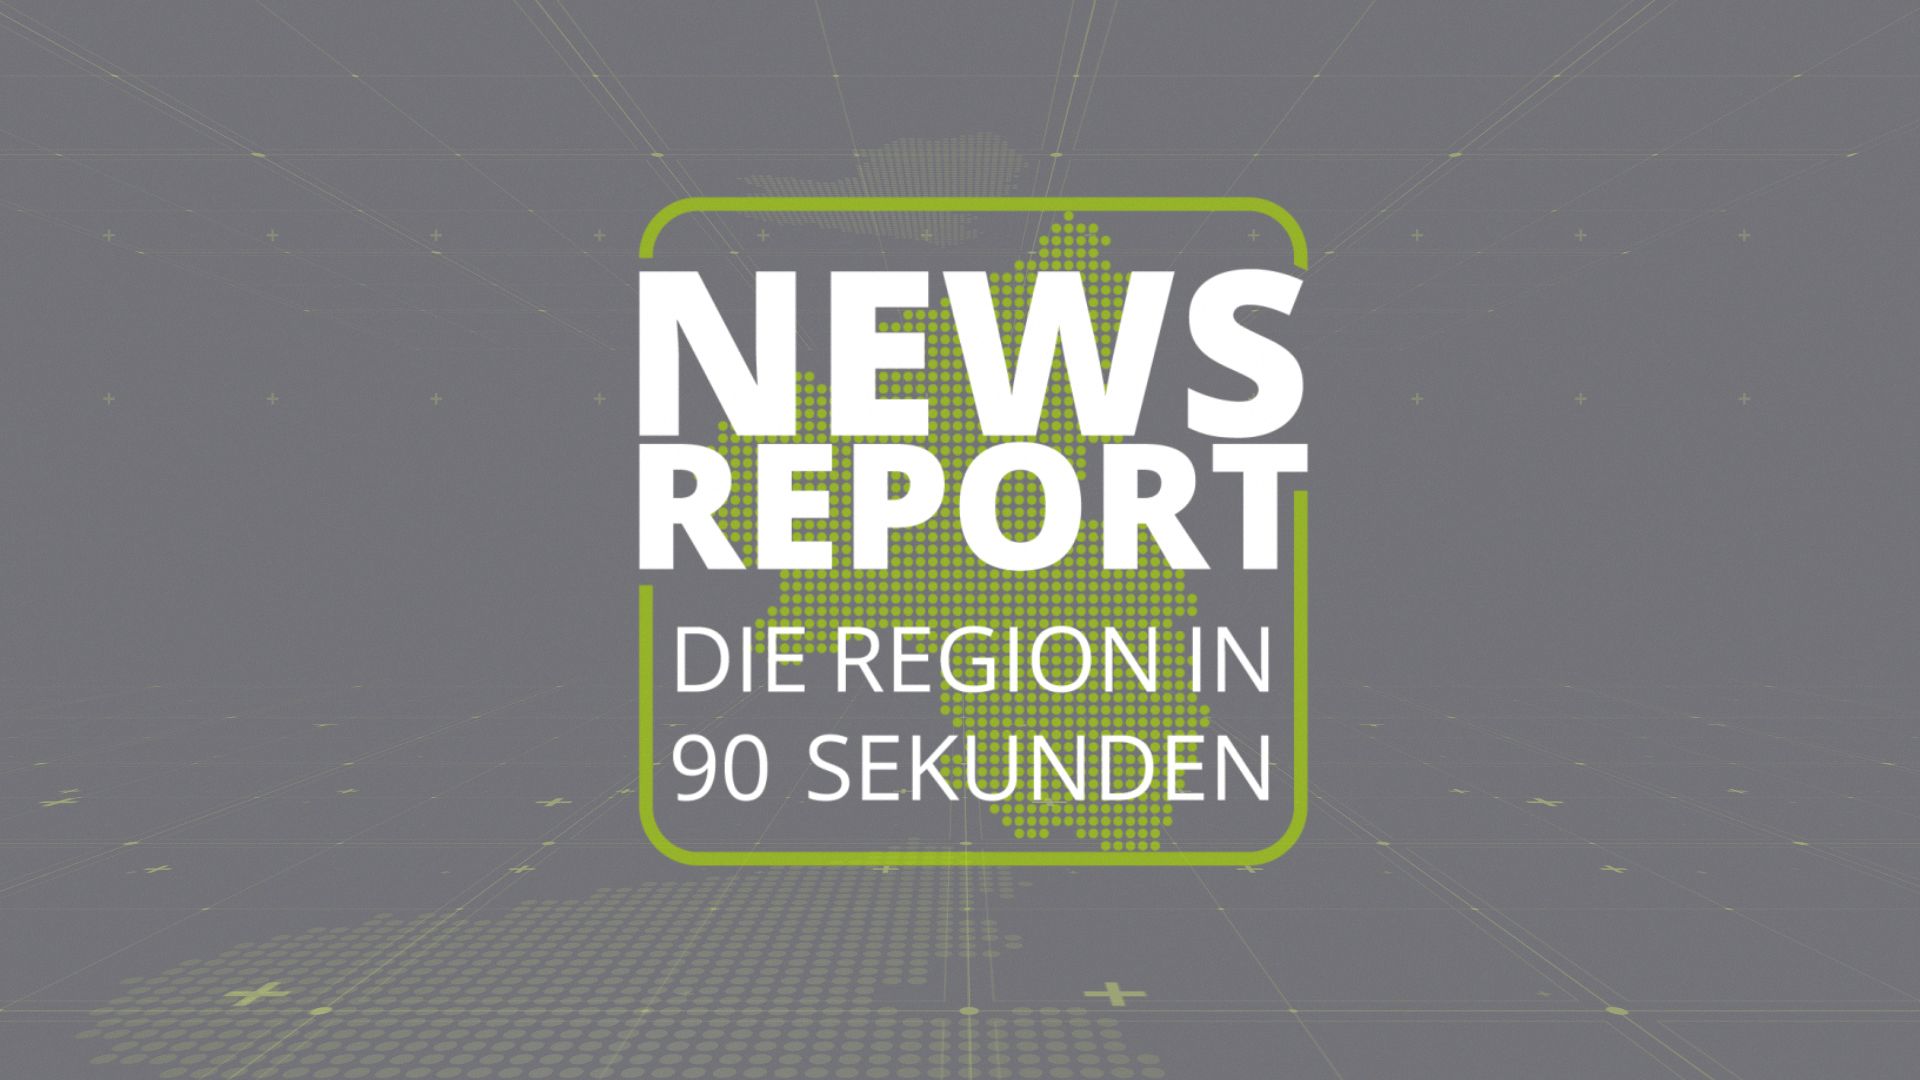 Newsreport - Die Region in 90 Sekunden